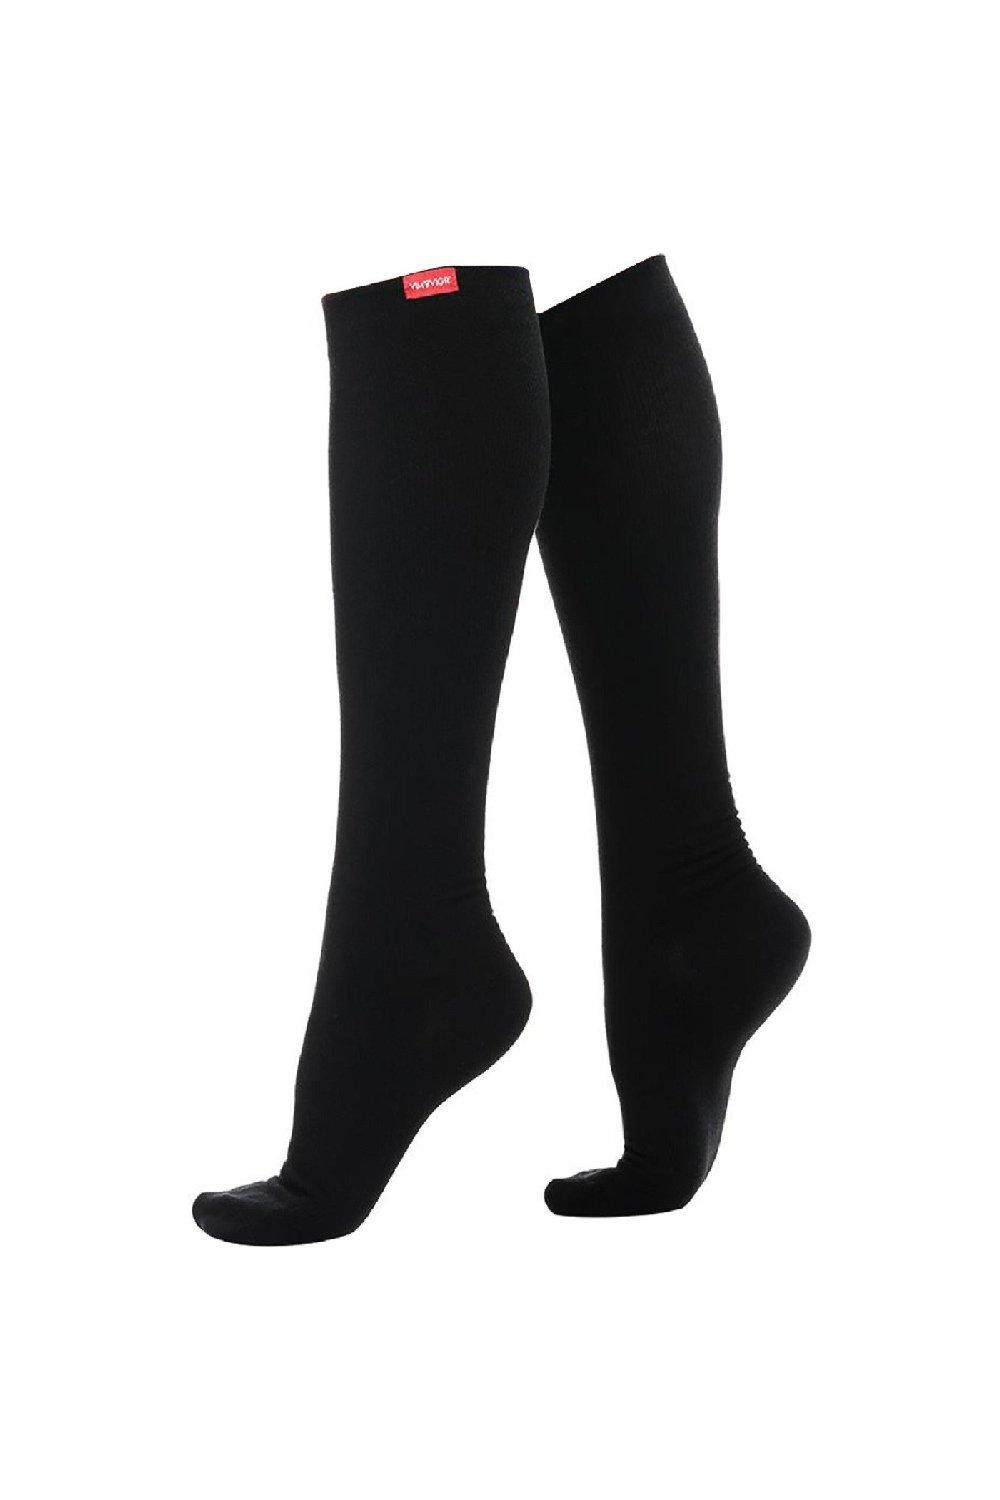 Wide Calf Graduated Compression Socks 15-20 mmhg for Swollen Legs